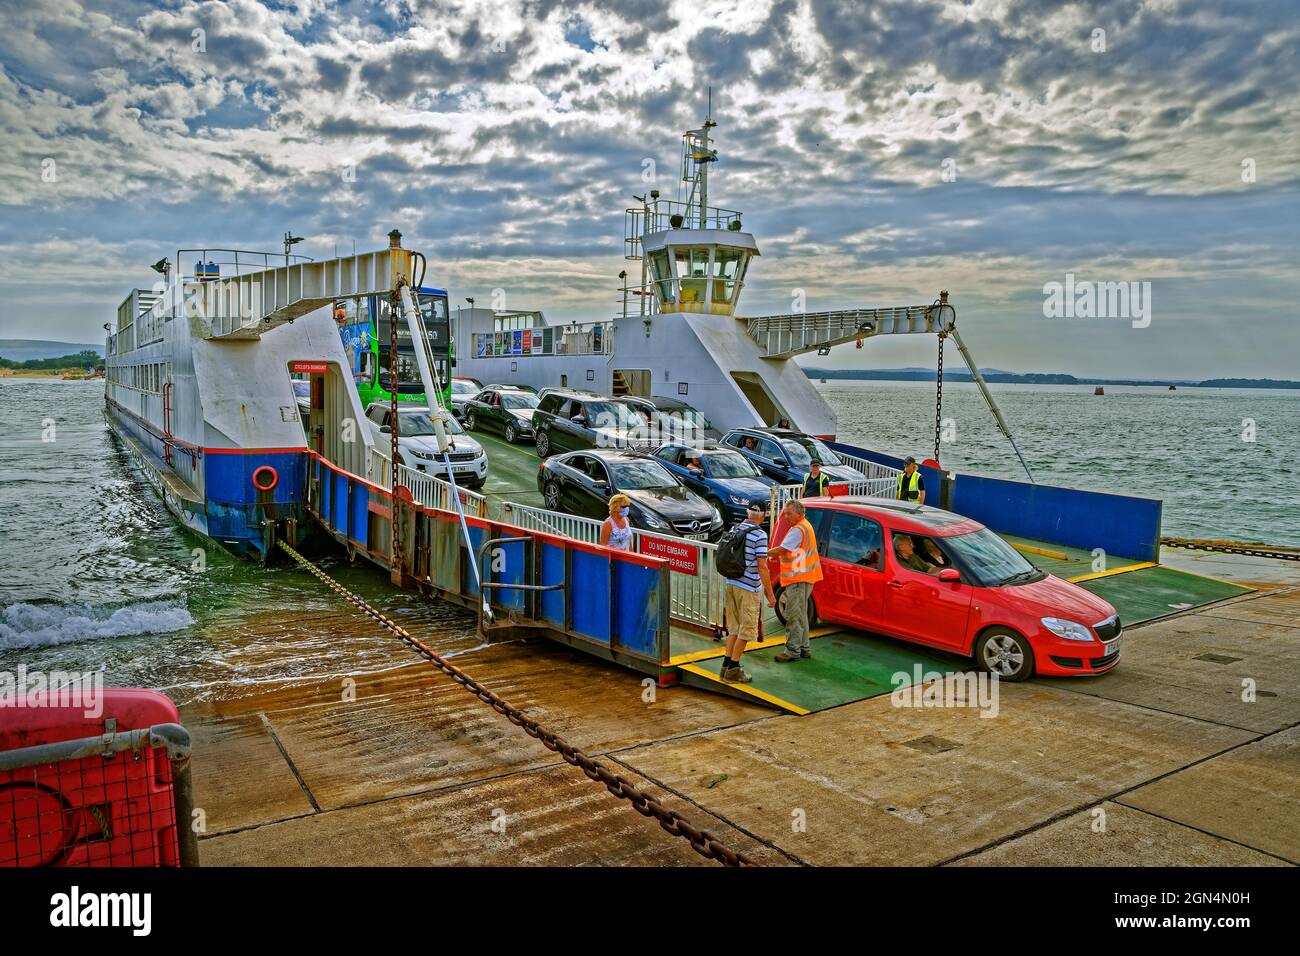 The Sandbanks Ferry offloading at Sandbanks Terminal at Sandbanks, Dorset, England. Stock Photo